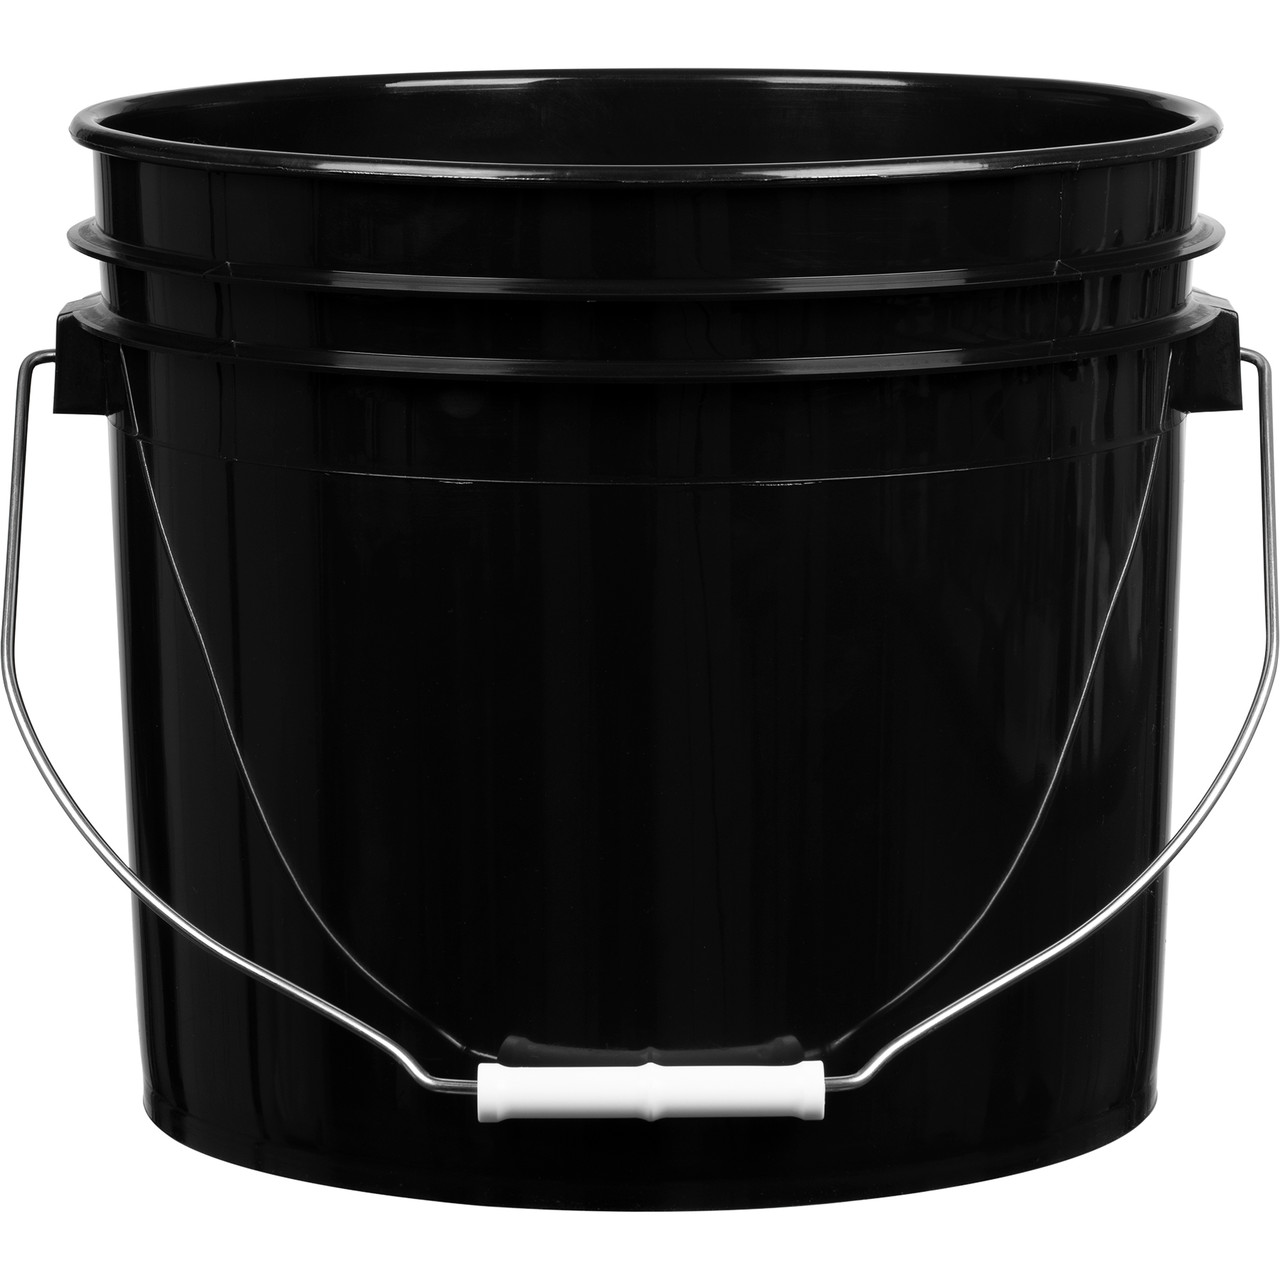 Single 3.5 Gallon Bucket with Lid